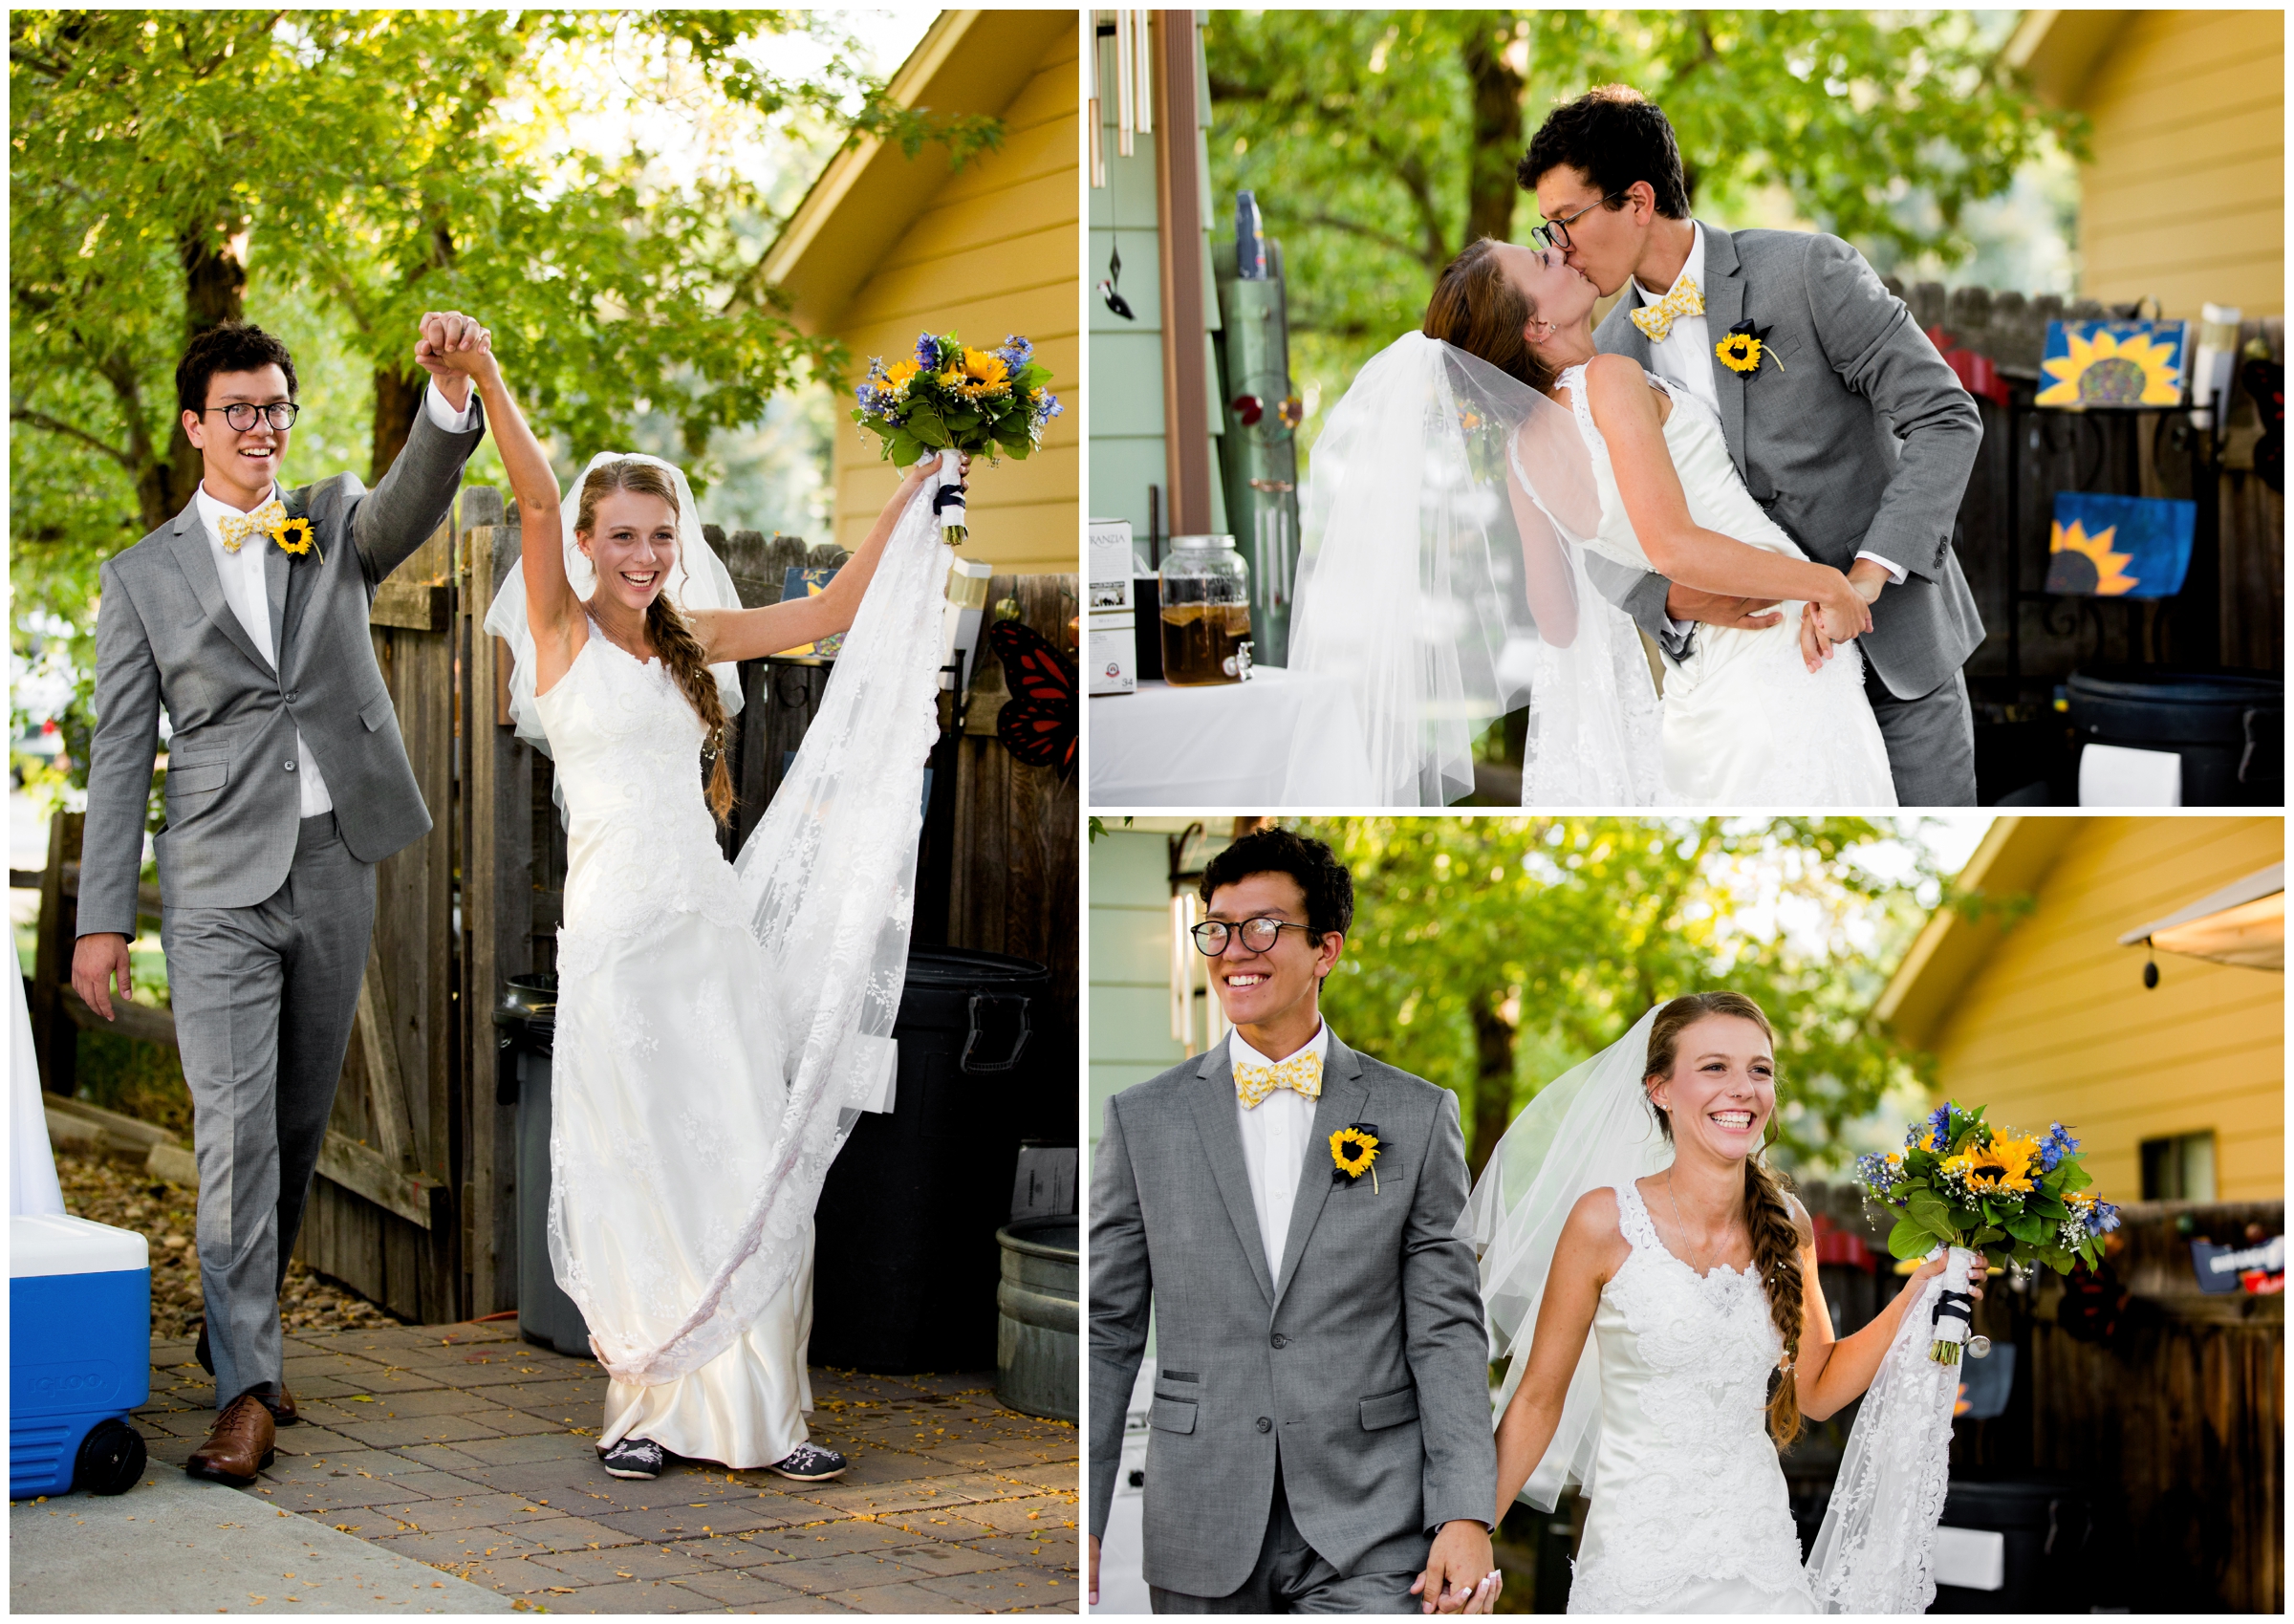 reception introductions at Golden Colorado backyard wedding